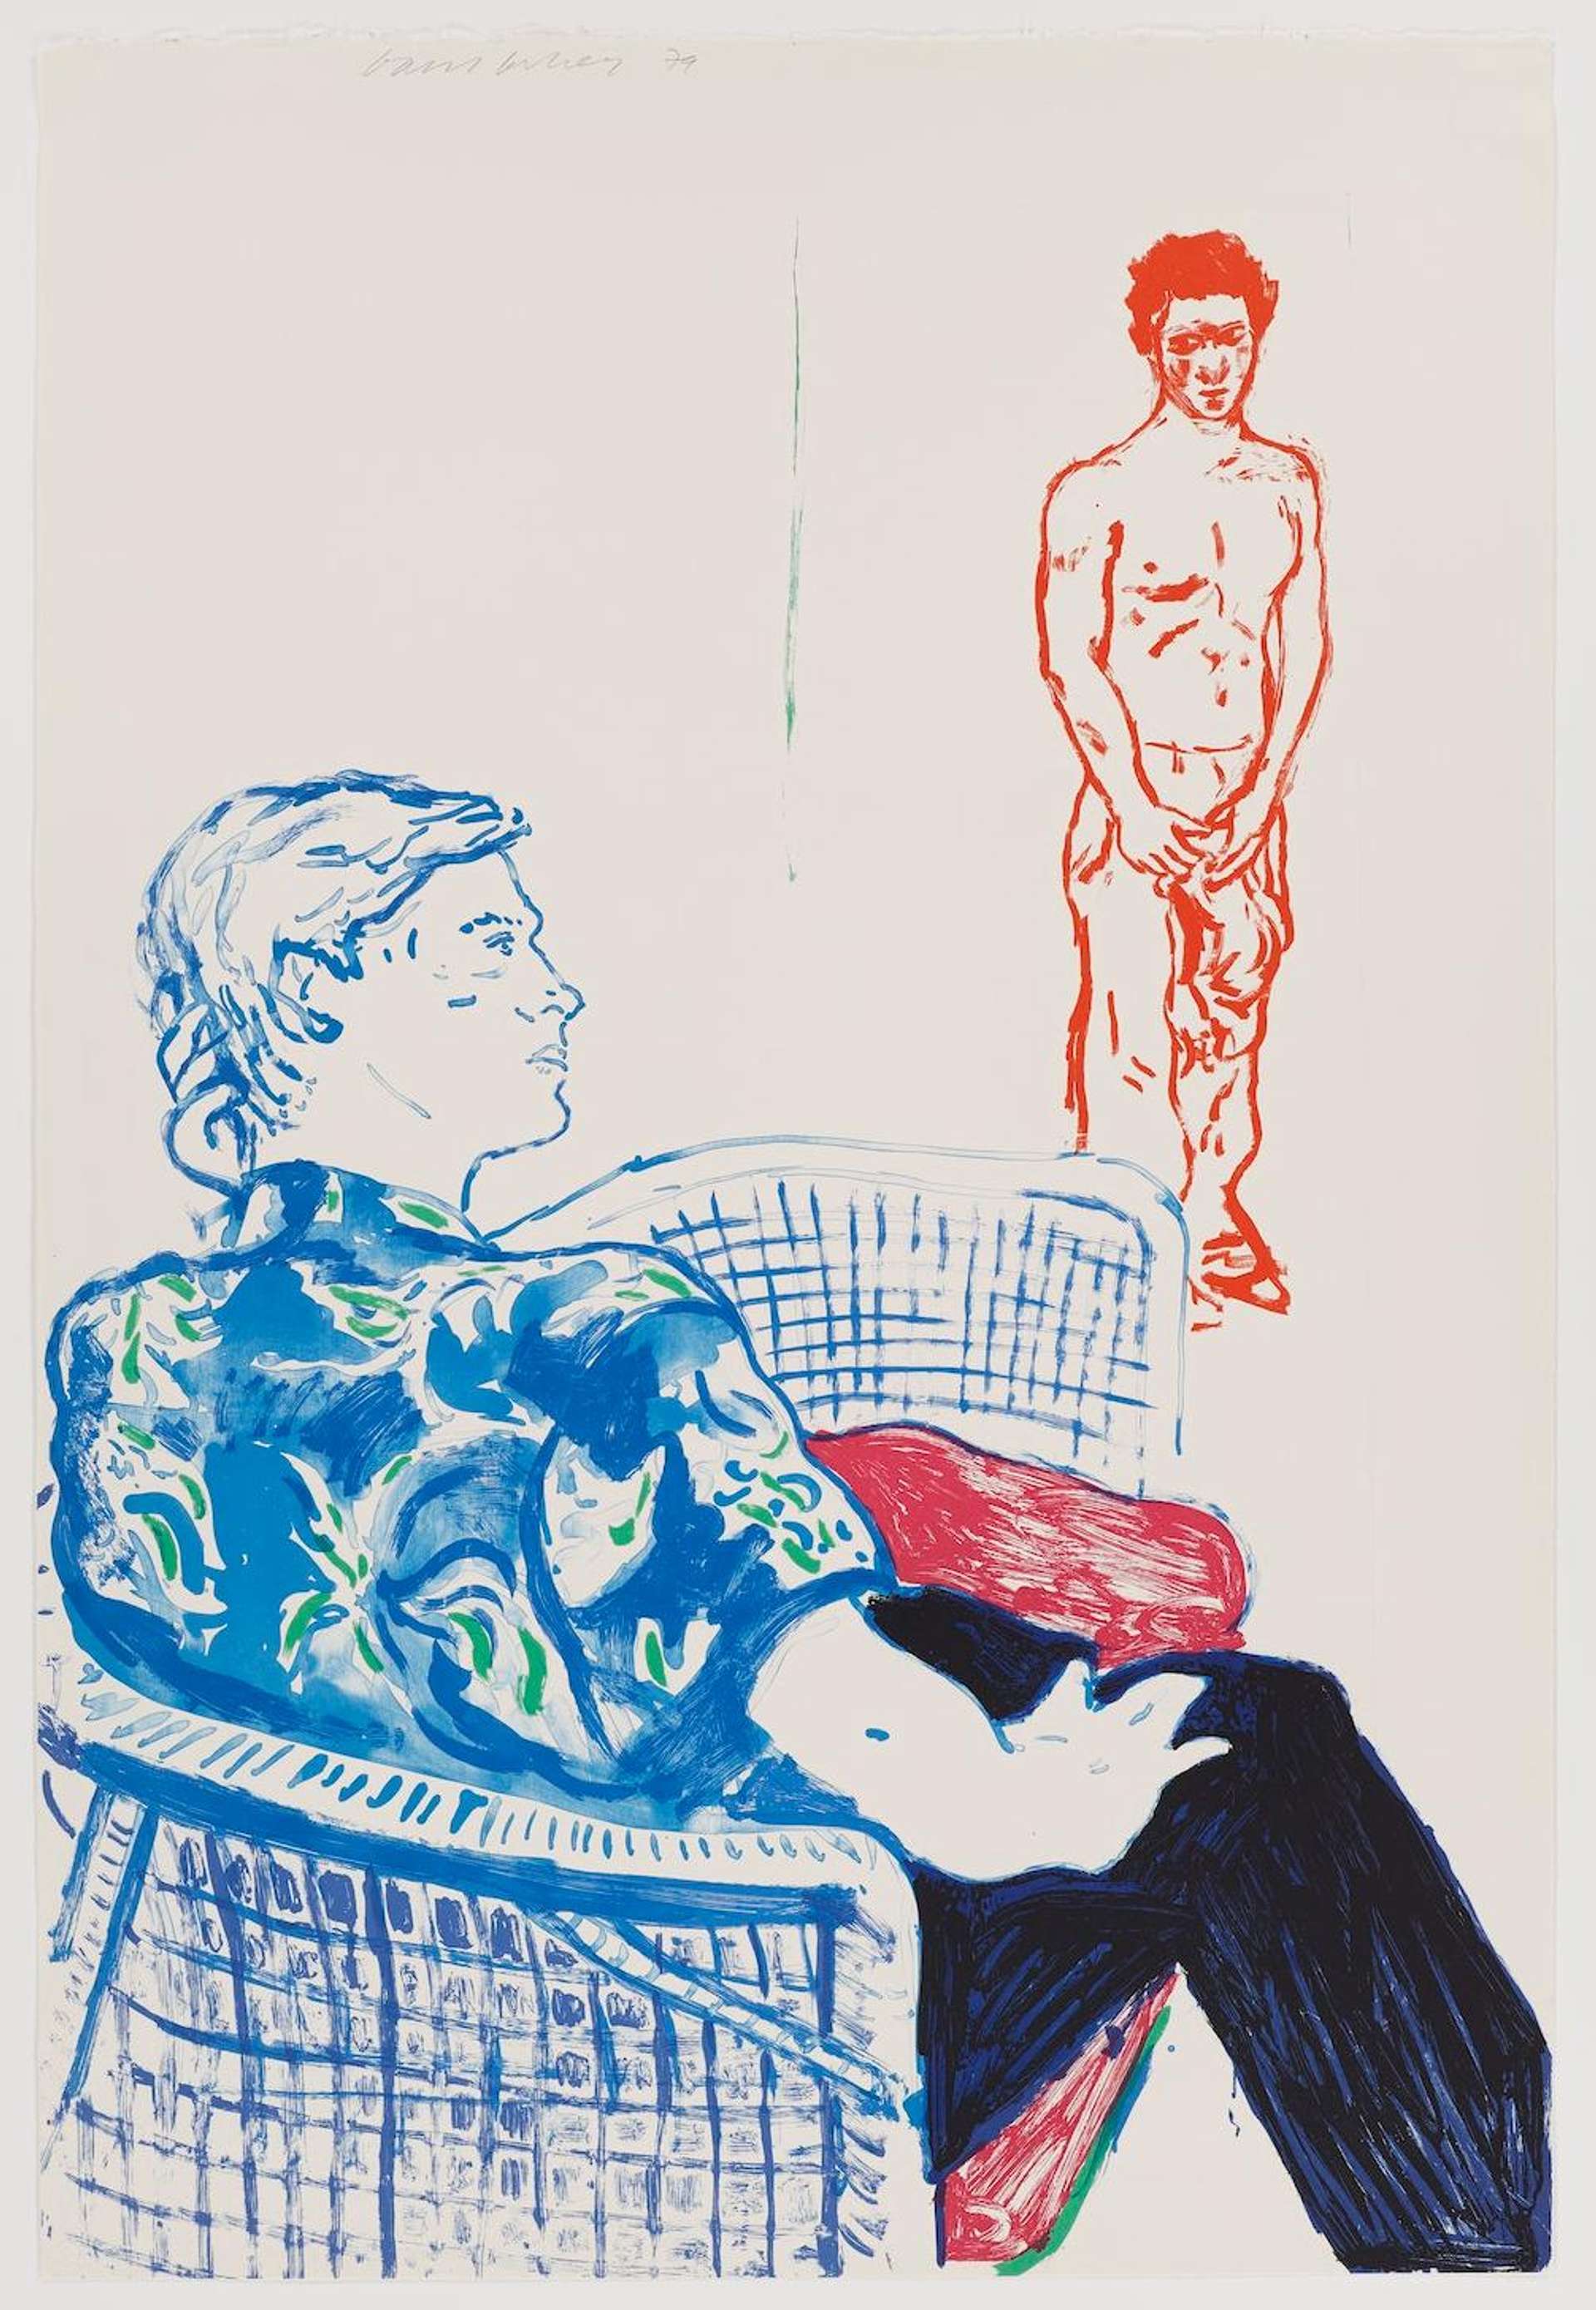 Joe With David Harte - Signed Print by David Hockney 1979 - MyArtBroker